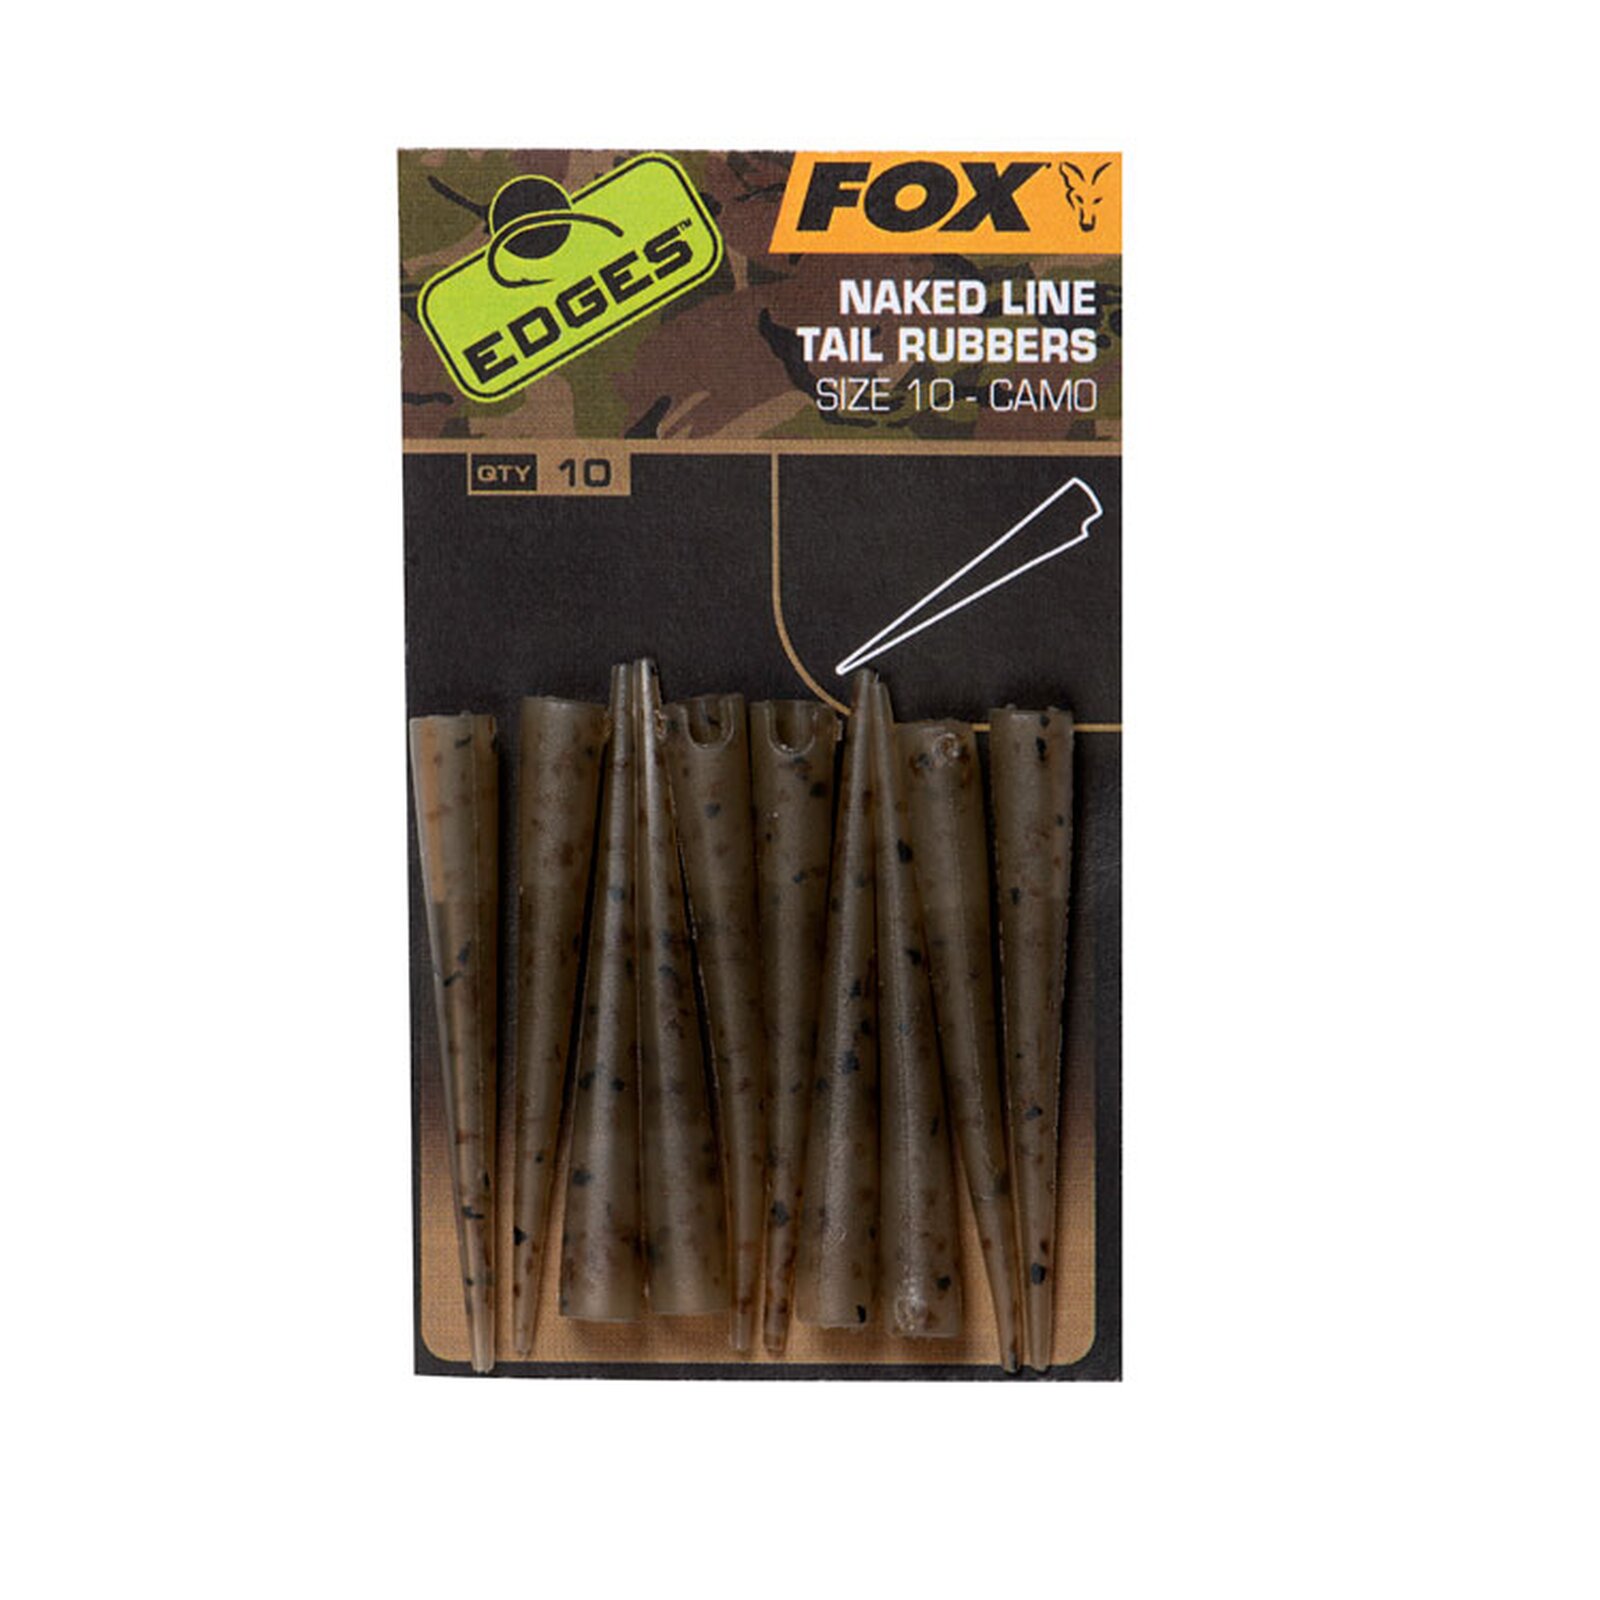 FOX EDGES Camo Naked Line Tail Rubbers Sz 10